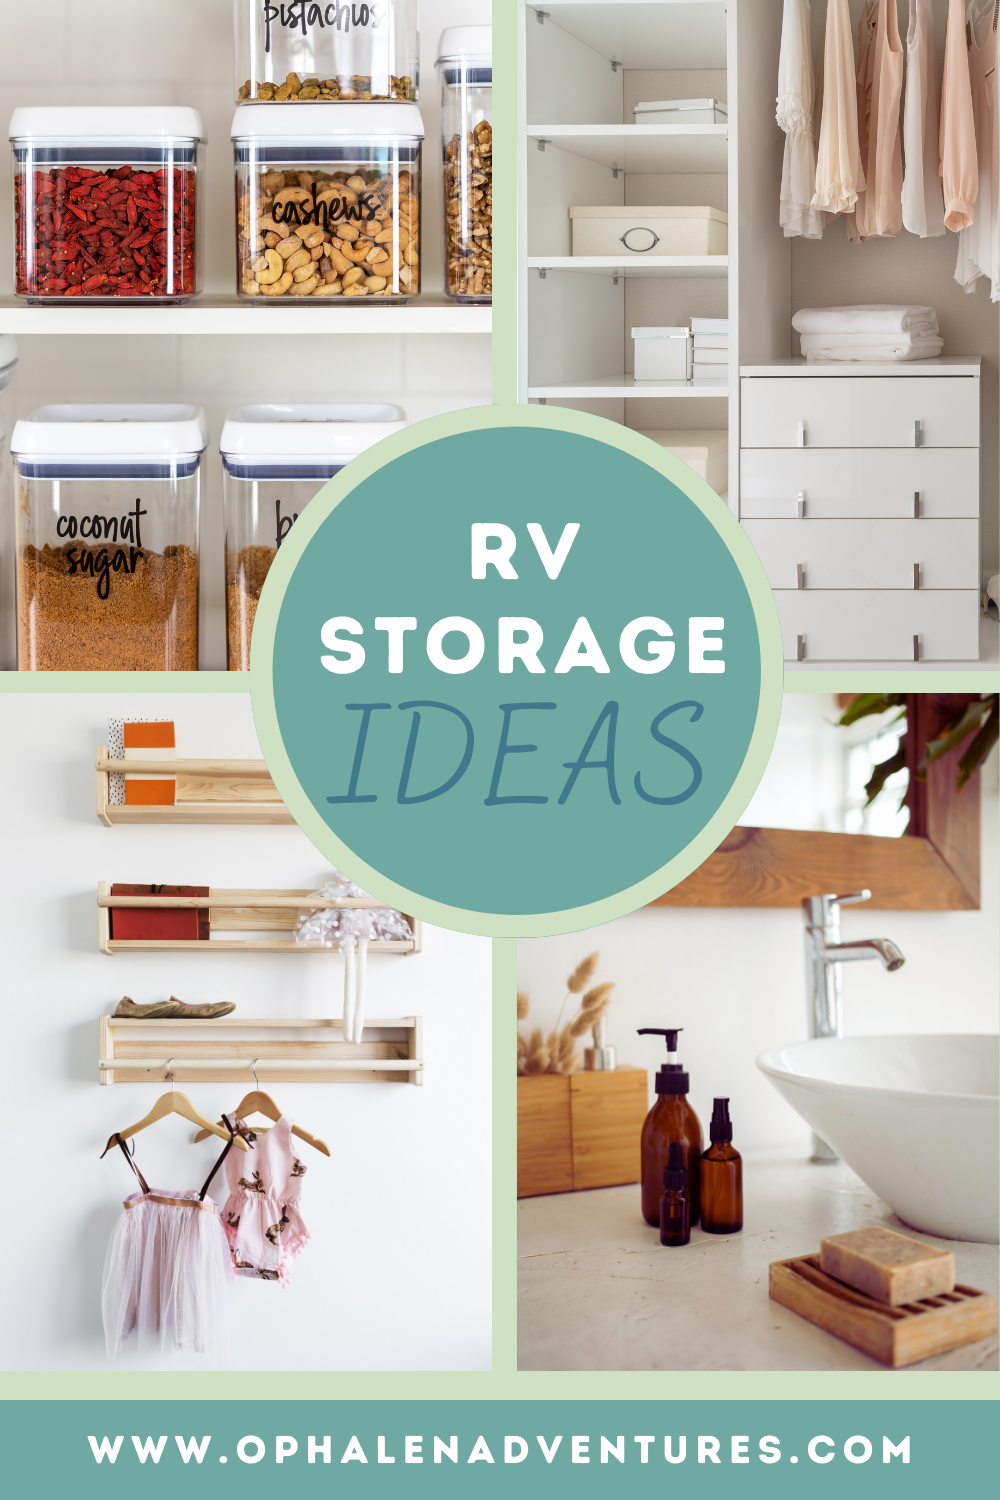 RV Storage Ideas: Hurry to Get These RV Organizing Hacks!